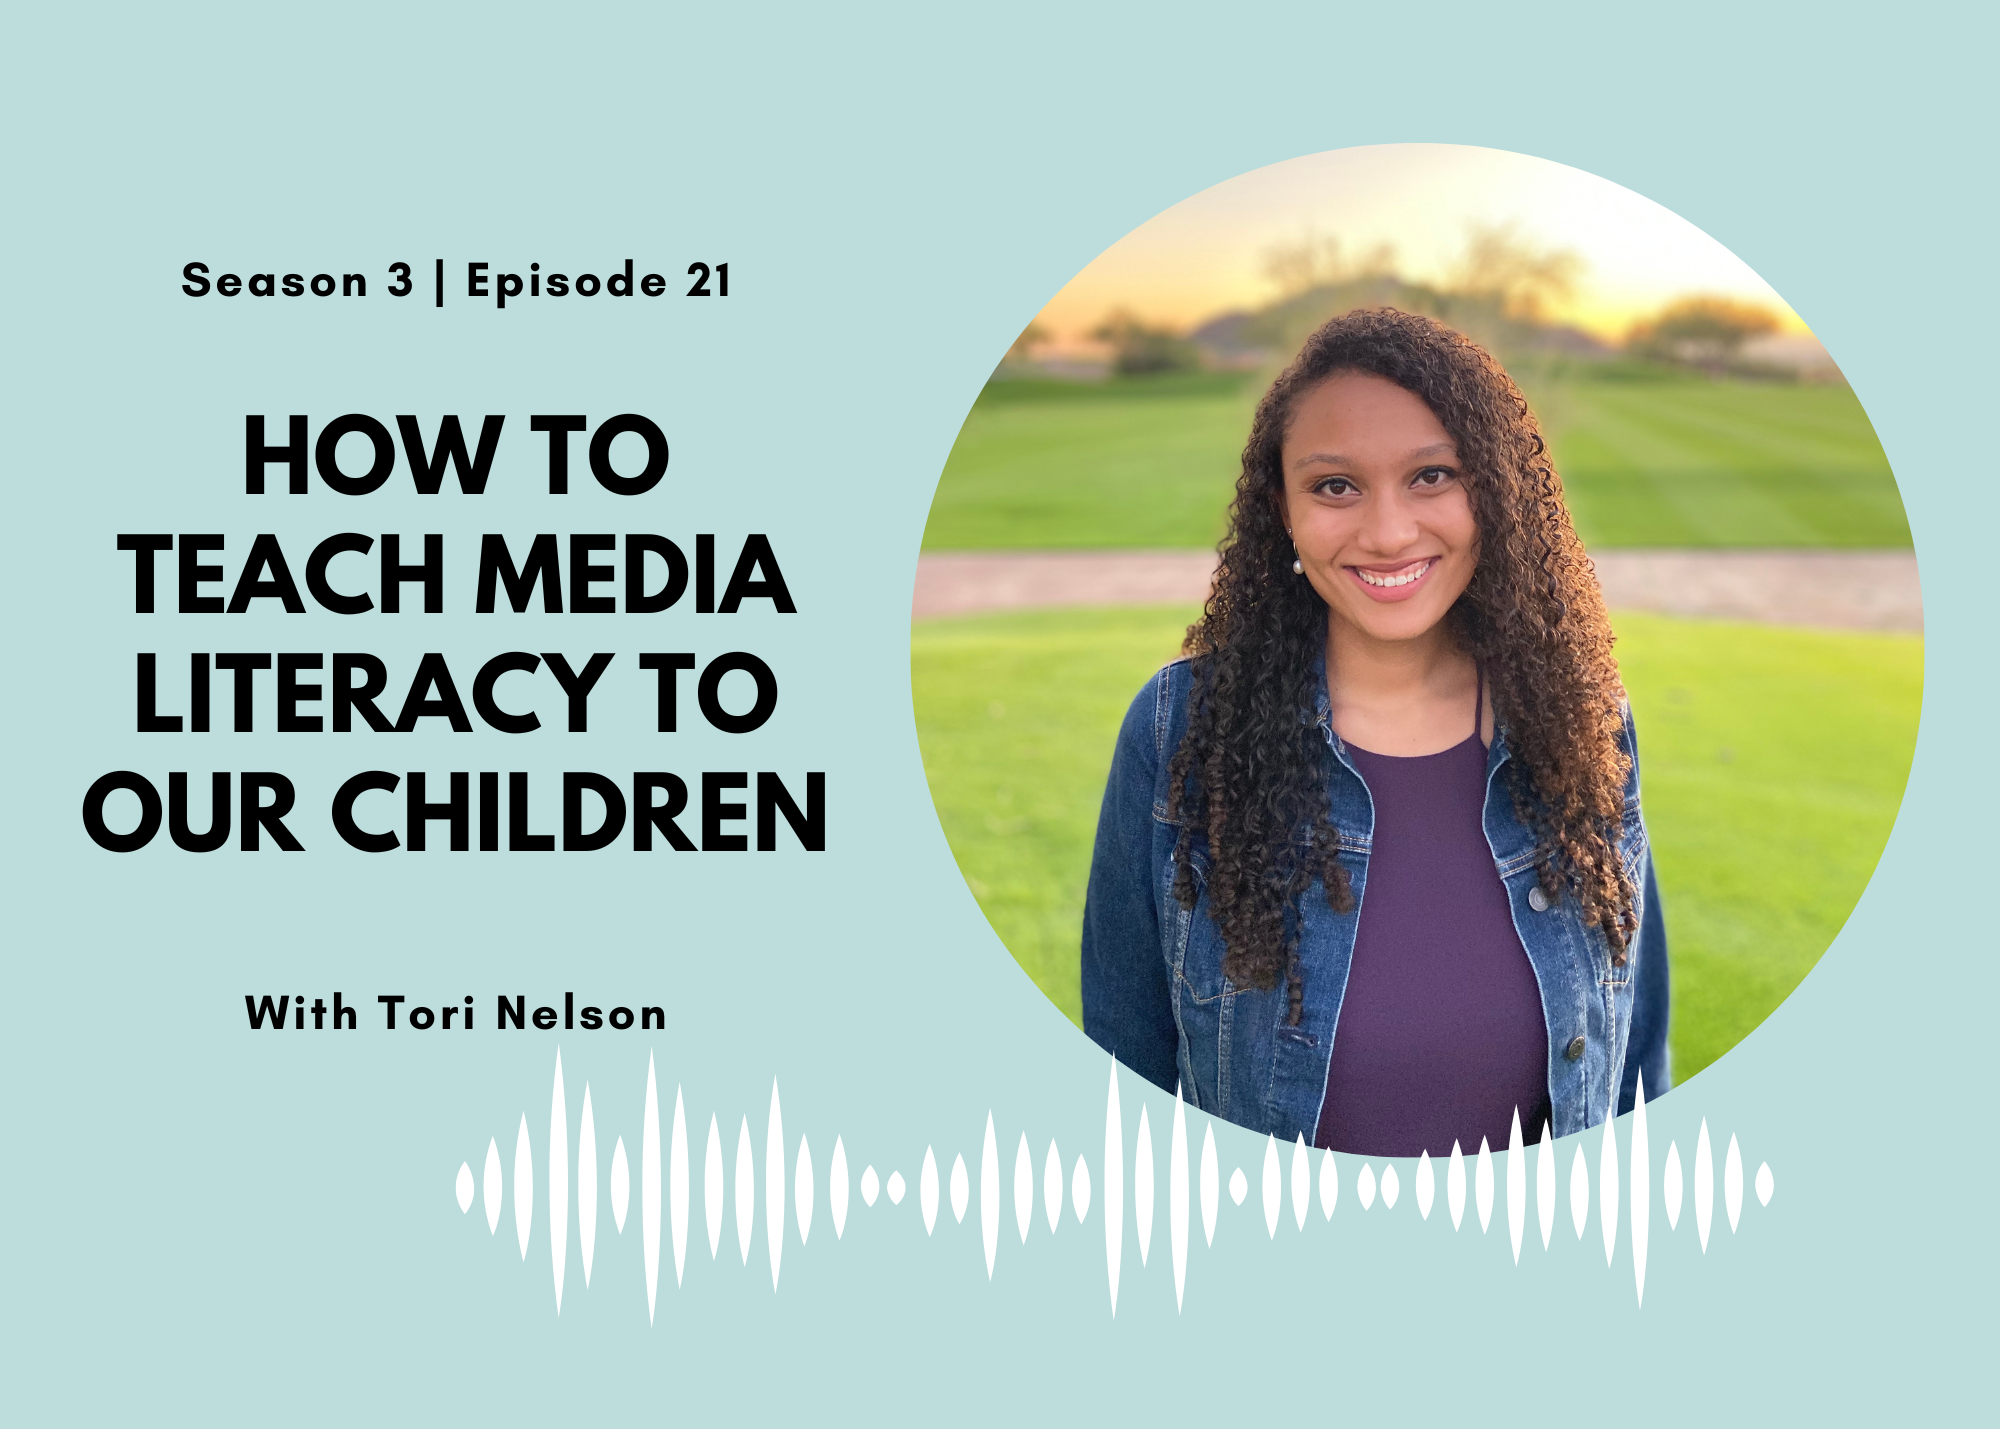 How to Teach Media Literacy to Children